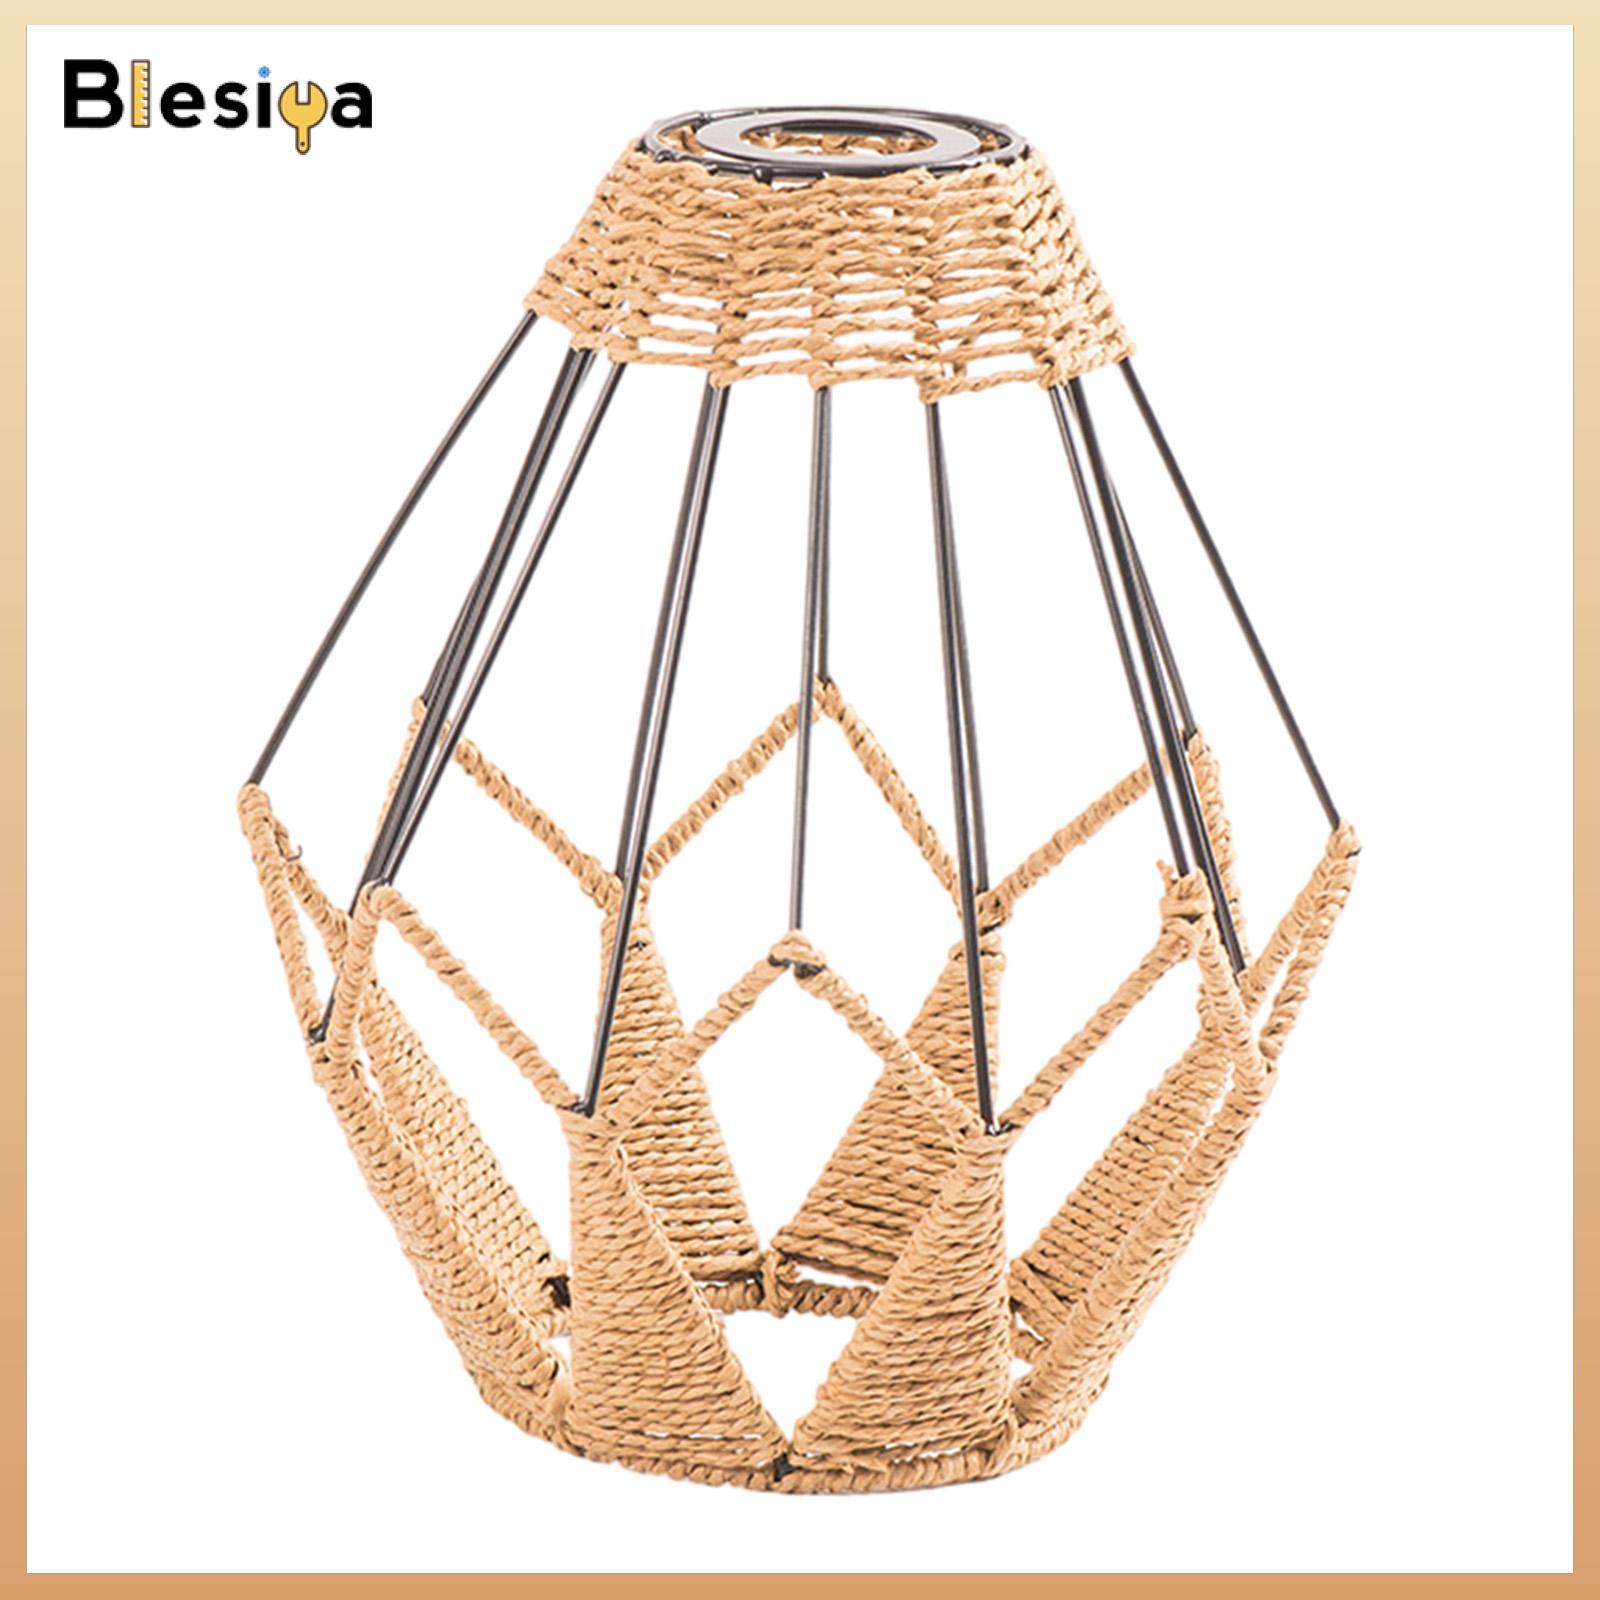 Blesiya Woven Pendant Lamp Shade Light Shade for Dining Room Kitchen